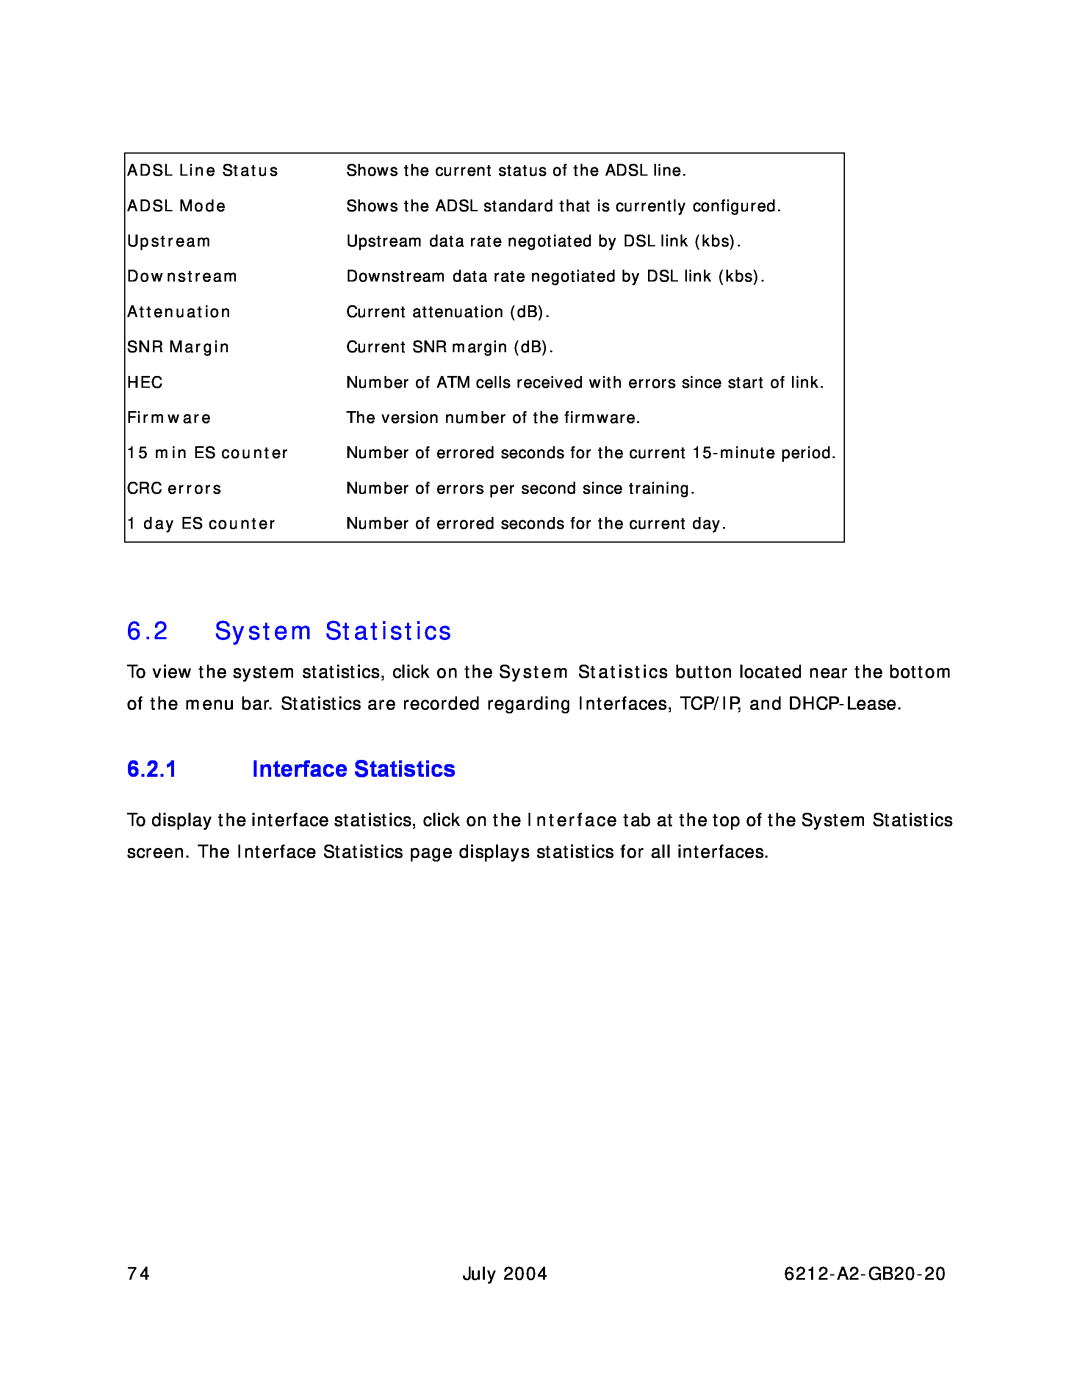 Paradyne 6212 manual System Statistics, Interface Statistics 